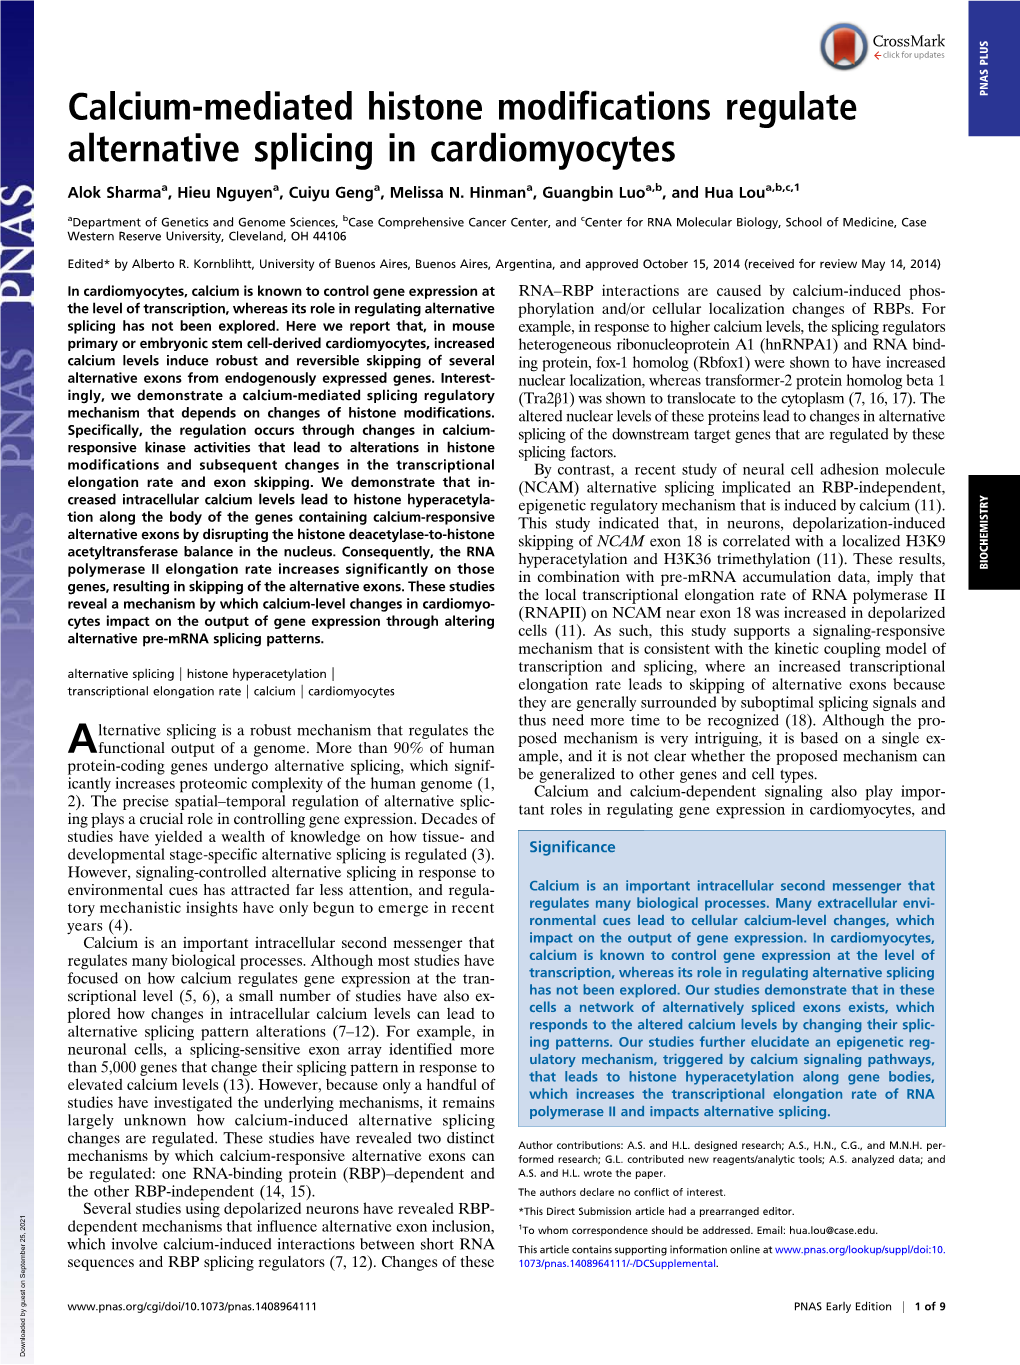 Calcium-Mediated Histone Modifications Regulate Alternative Splicing in Cardiomyocytes